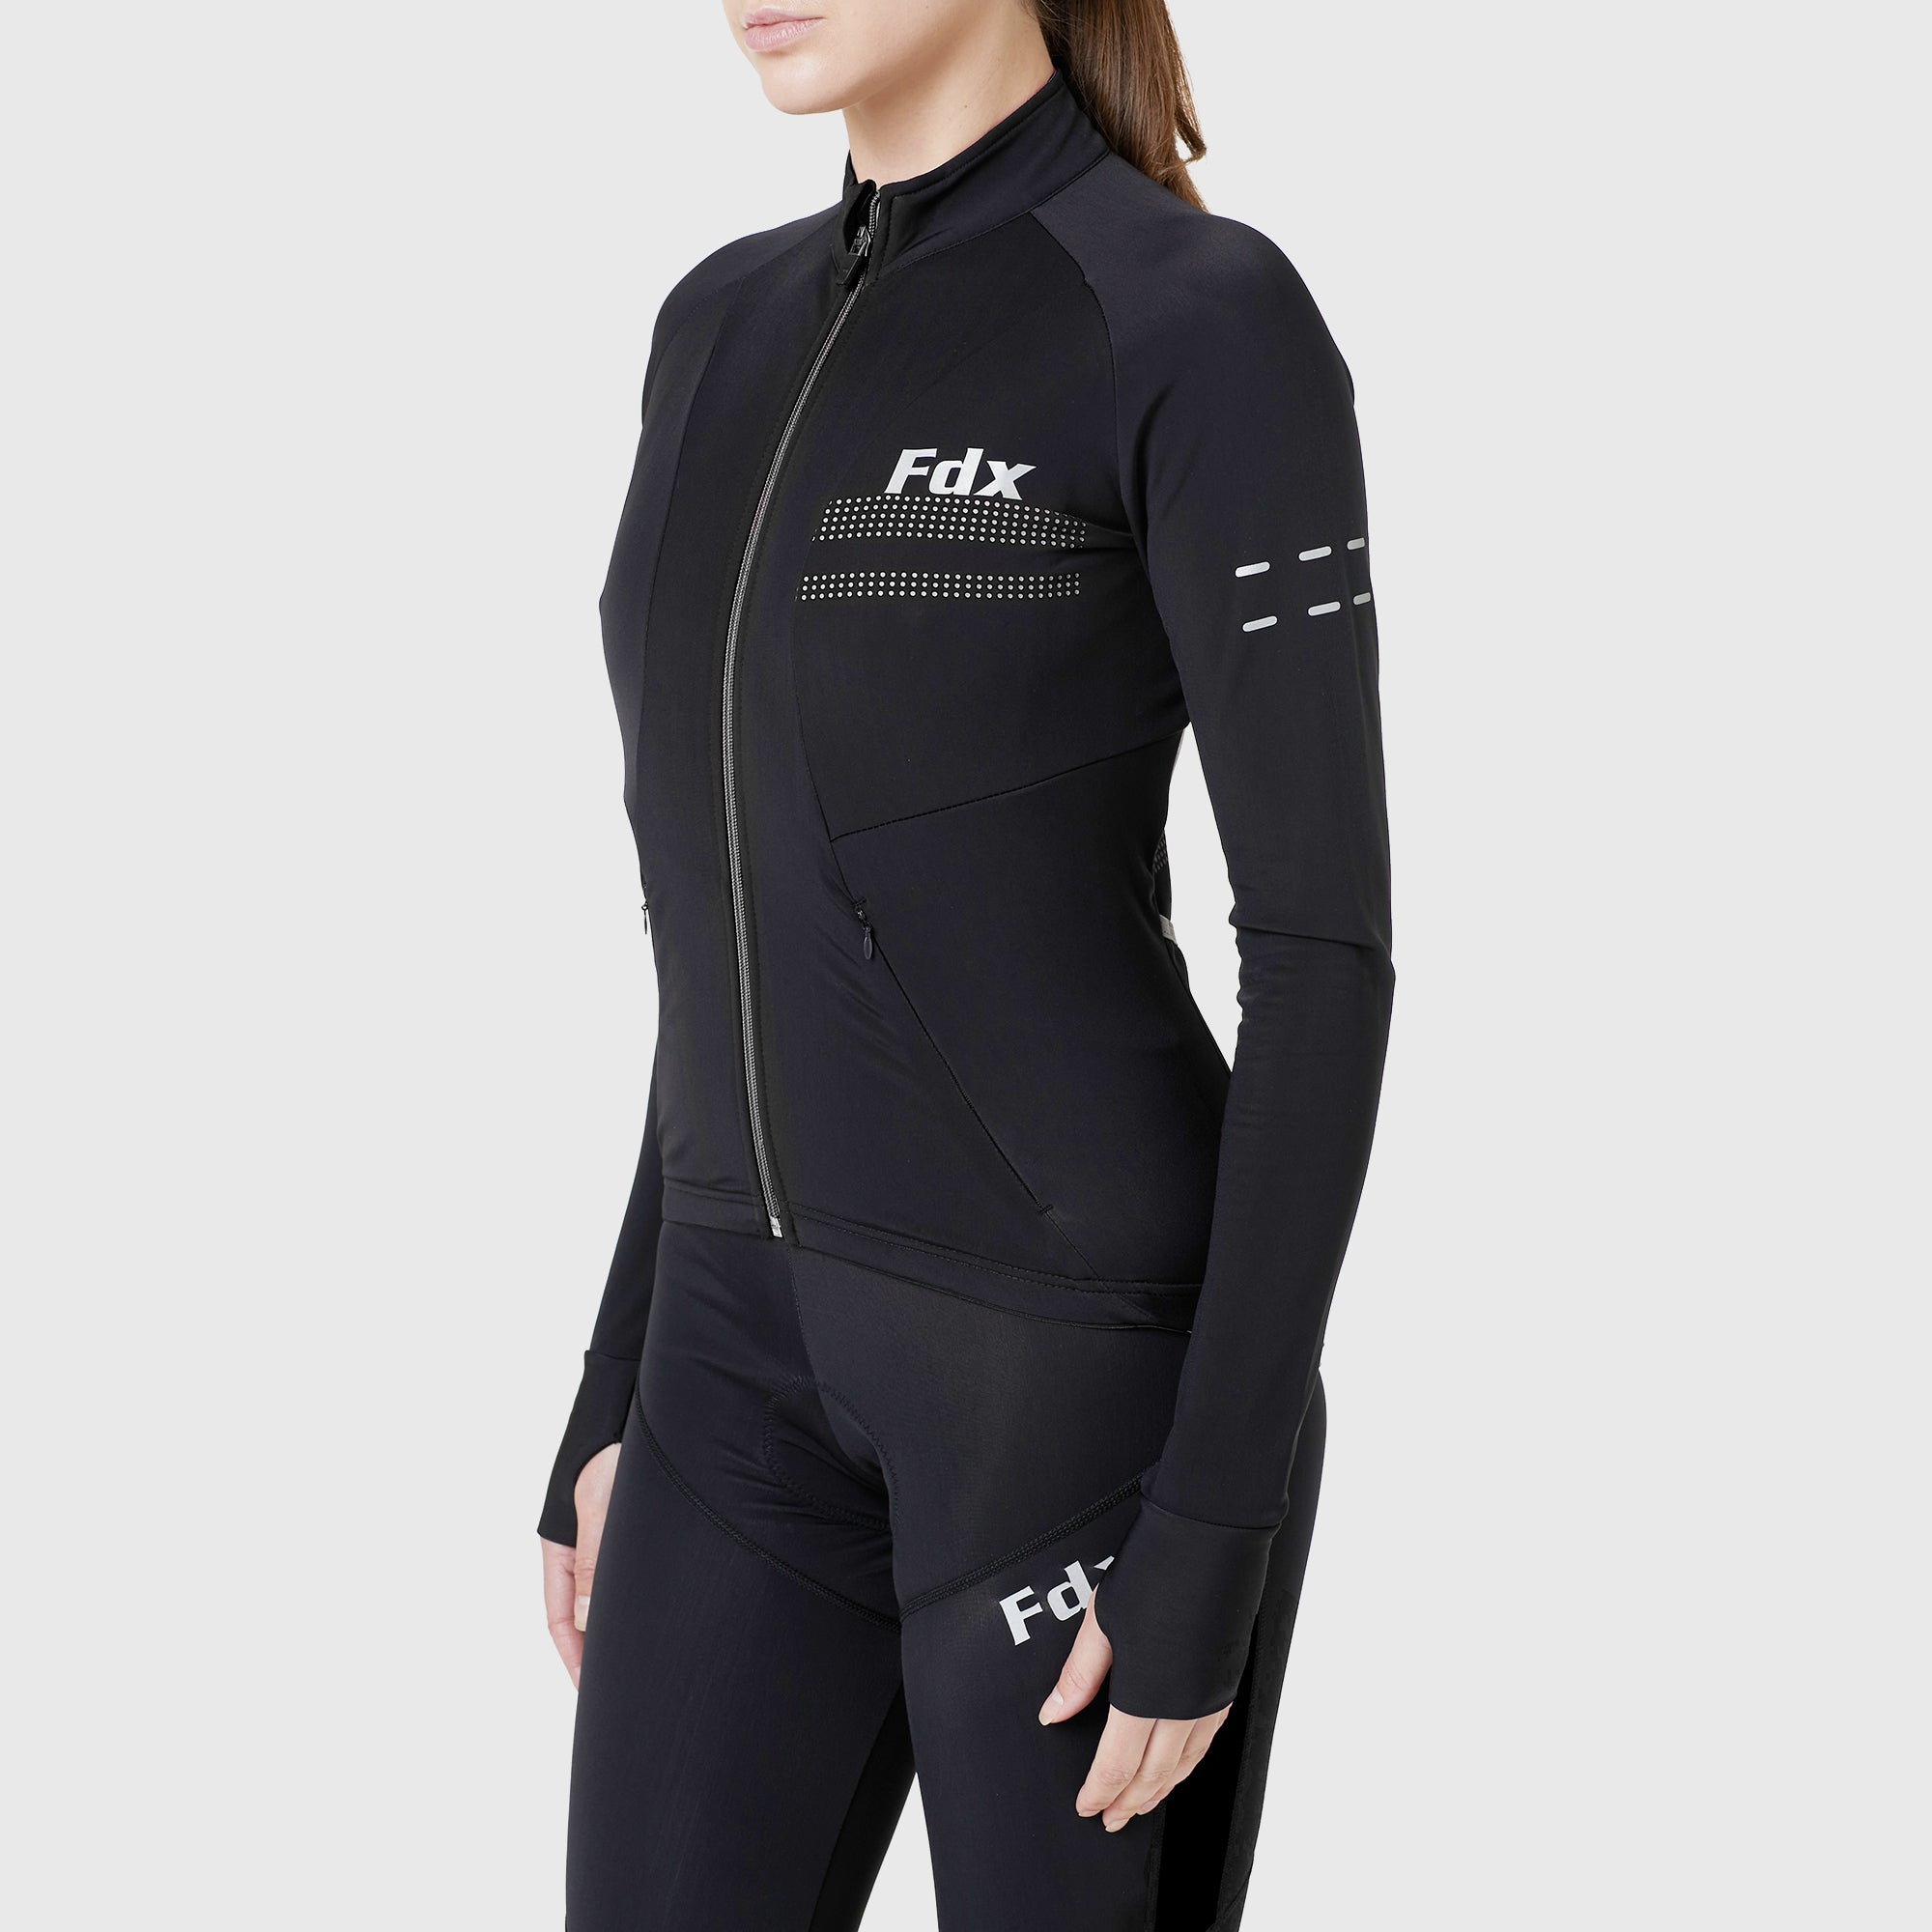 Fdx Best Women's Black Long Sleeve Cycling Jersey for Winter Roubaix Thermal Fleece Shirt Road Bike Wear Top Full Zipper, Lightweight  Pockets & Hi viz Reflectors - Arch